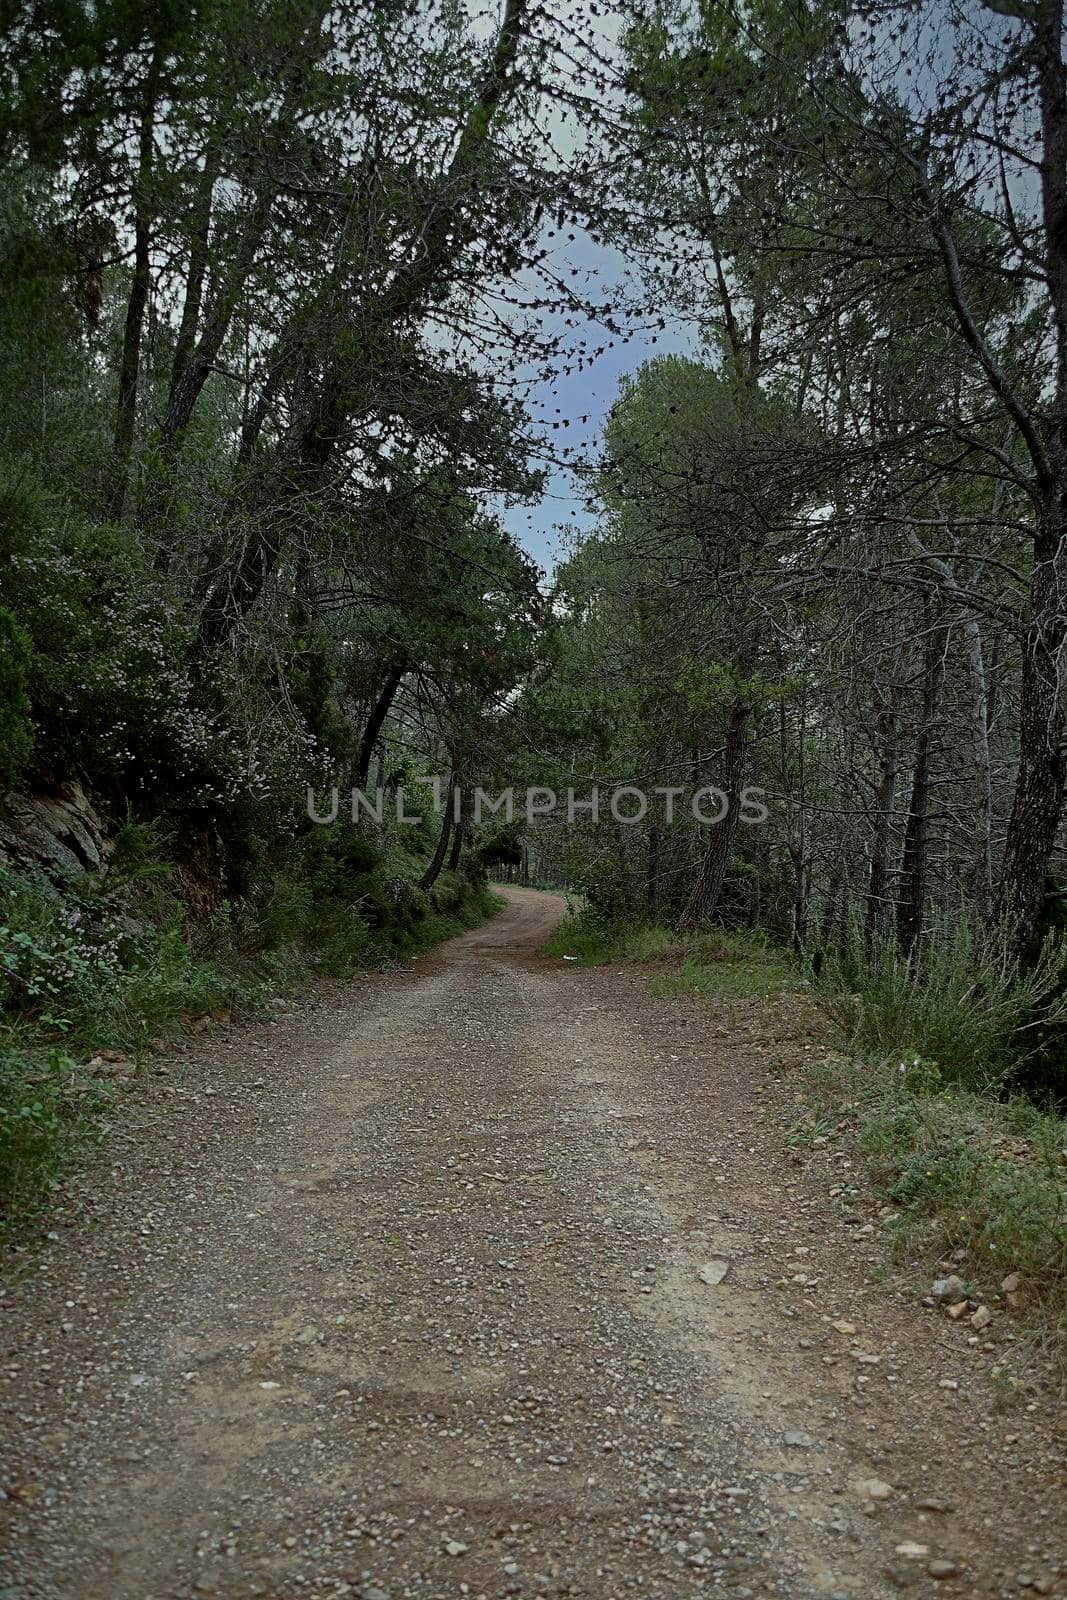 Mountain road through pine trees and vegetation by raul_ruiz